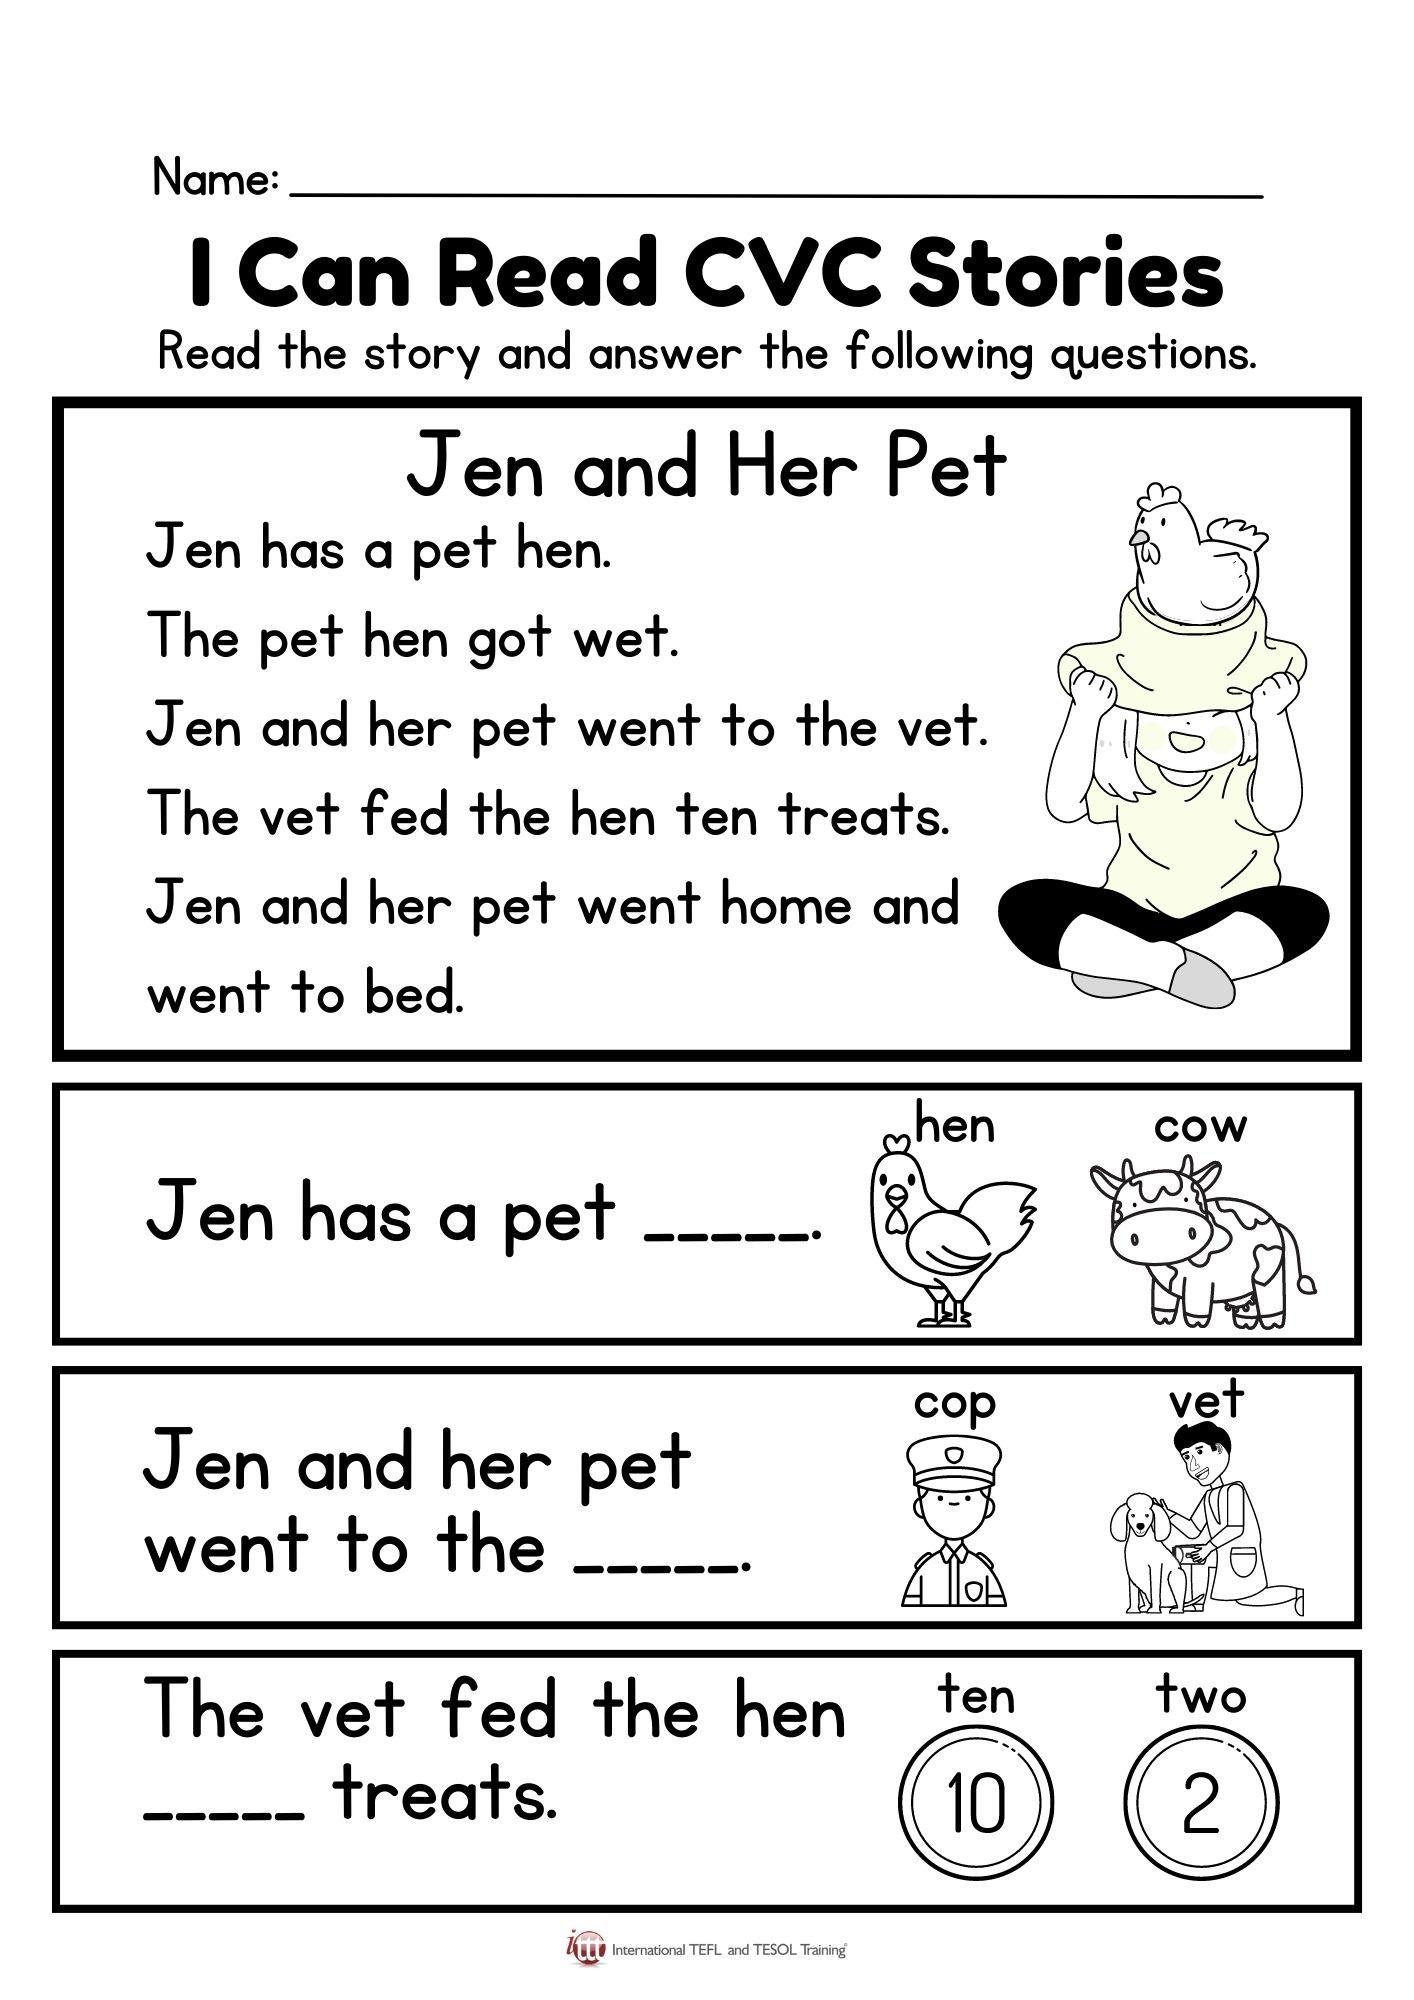 Grammar corner I Can Read CVC Stories - Jen and Her Pet